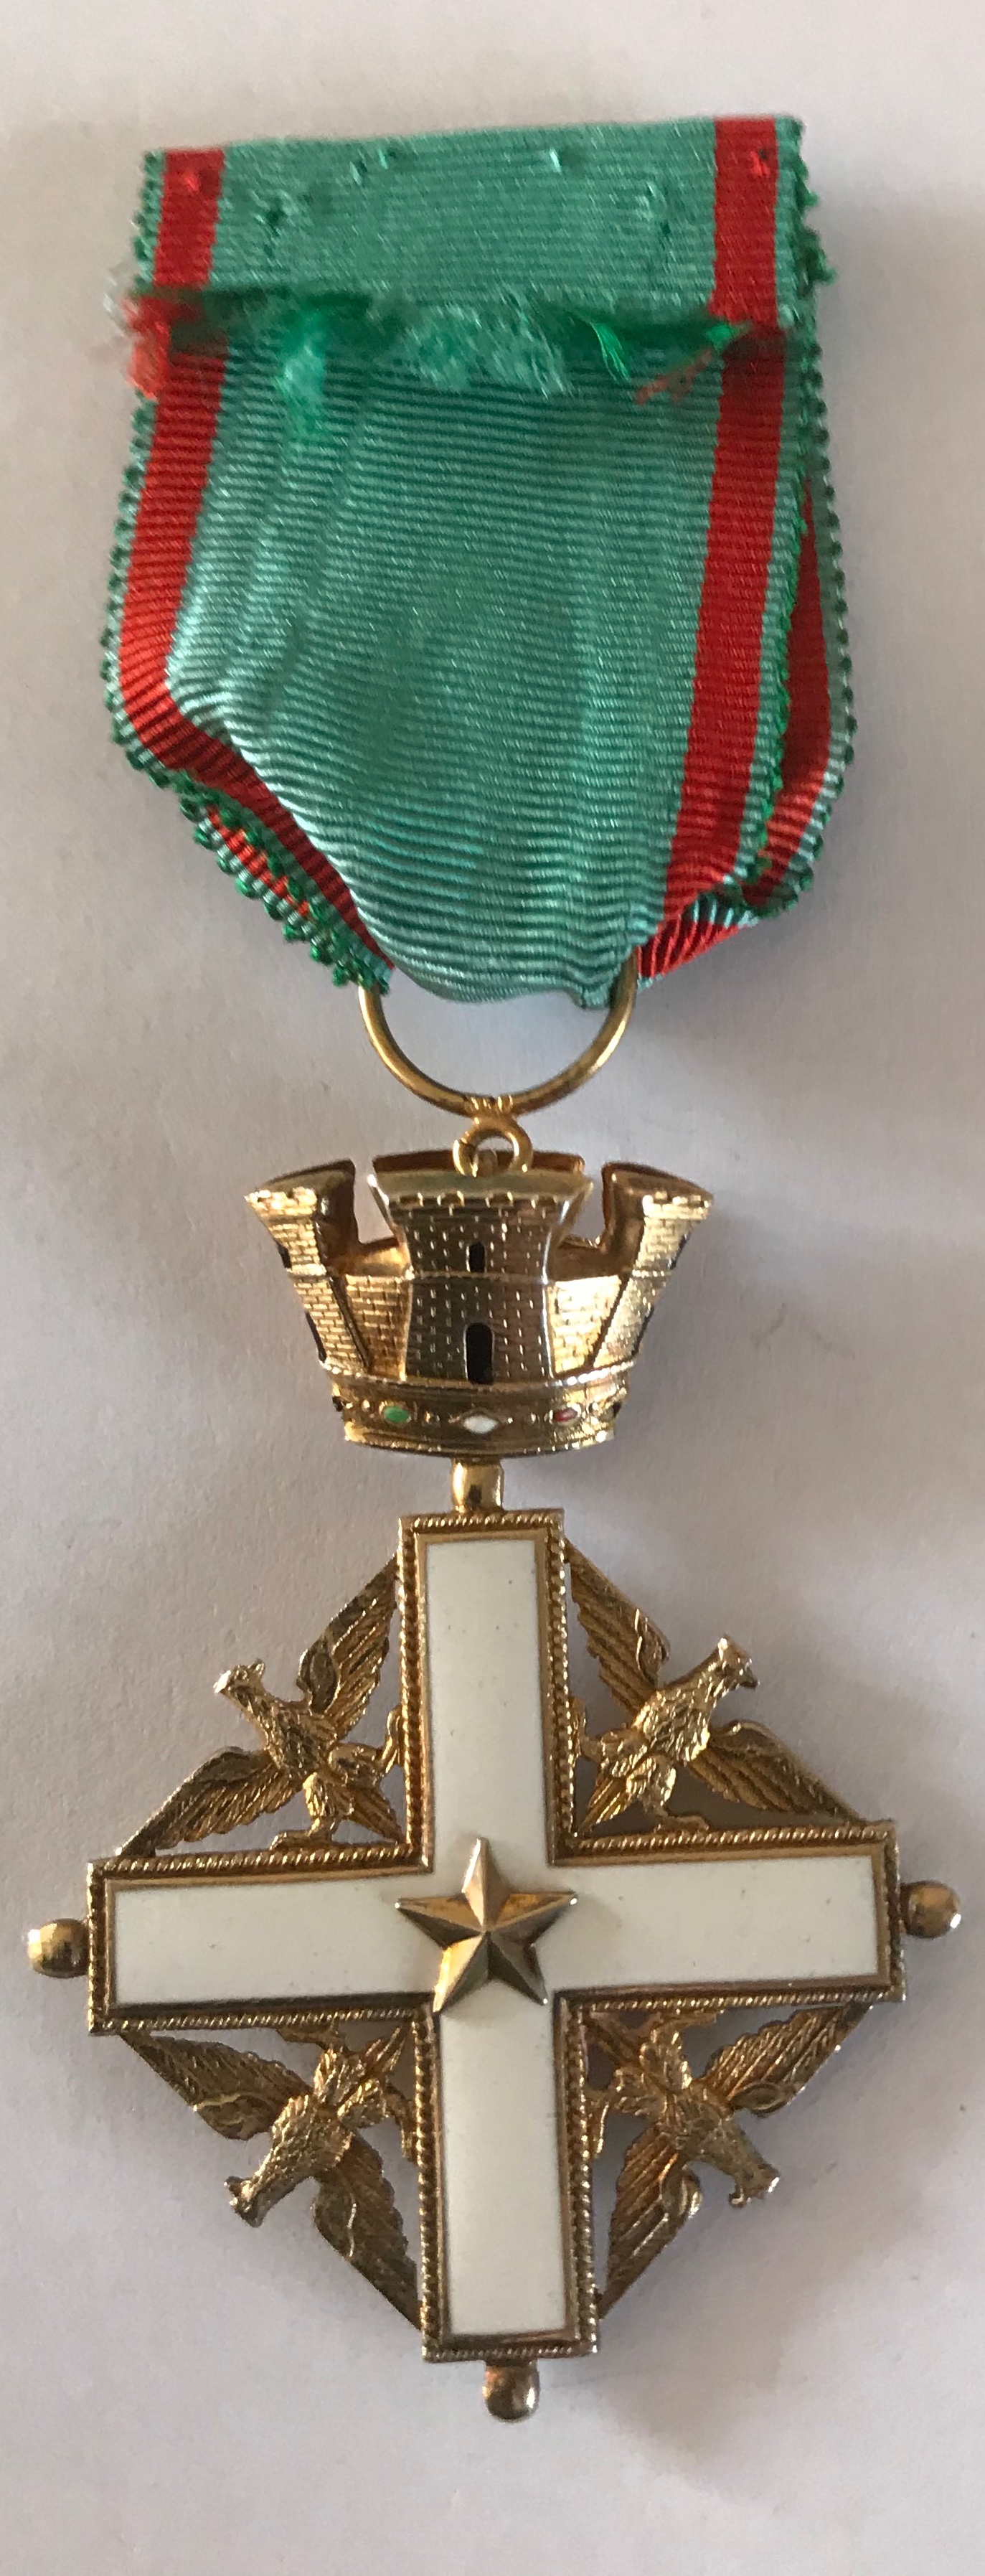 Italy Order Merit Knight's Cross Military Medal 1951 Award Decoration - Image 2 of 2